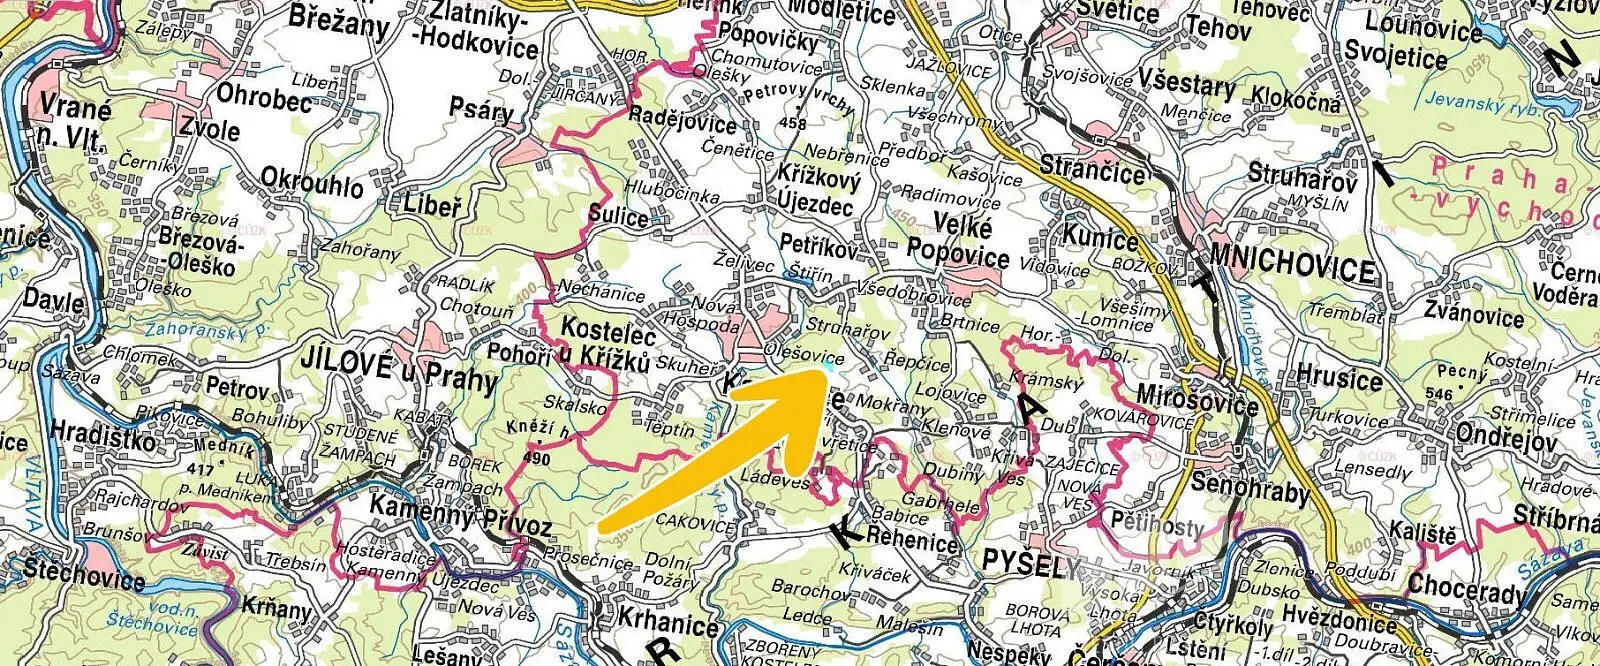 Velké Popovice - Řepčice, okres Praha-východ